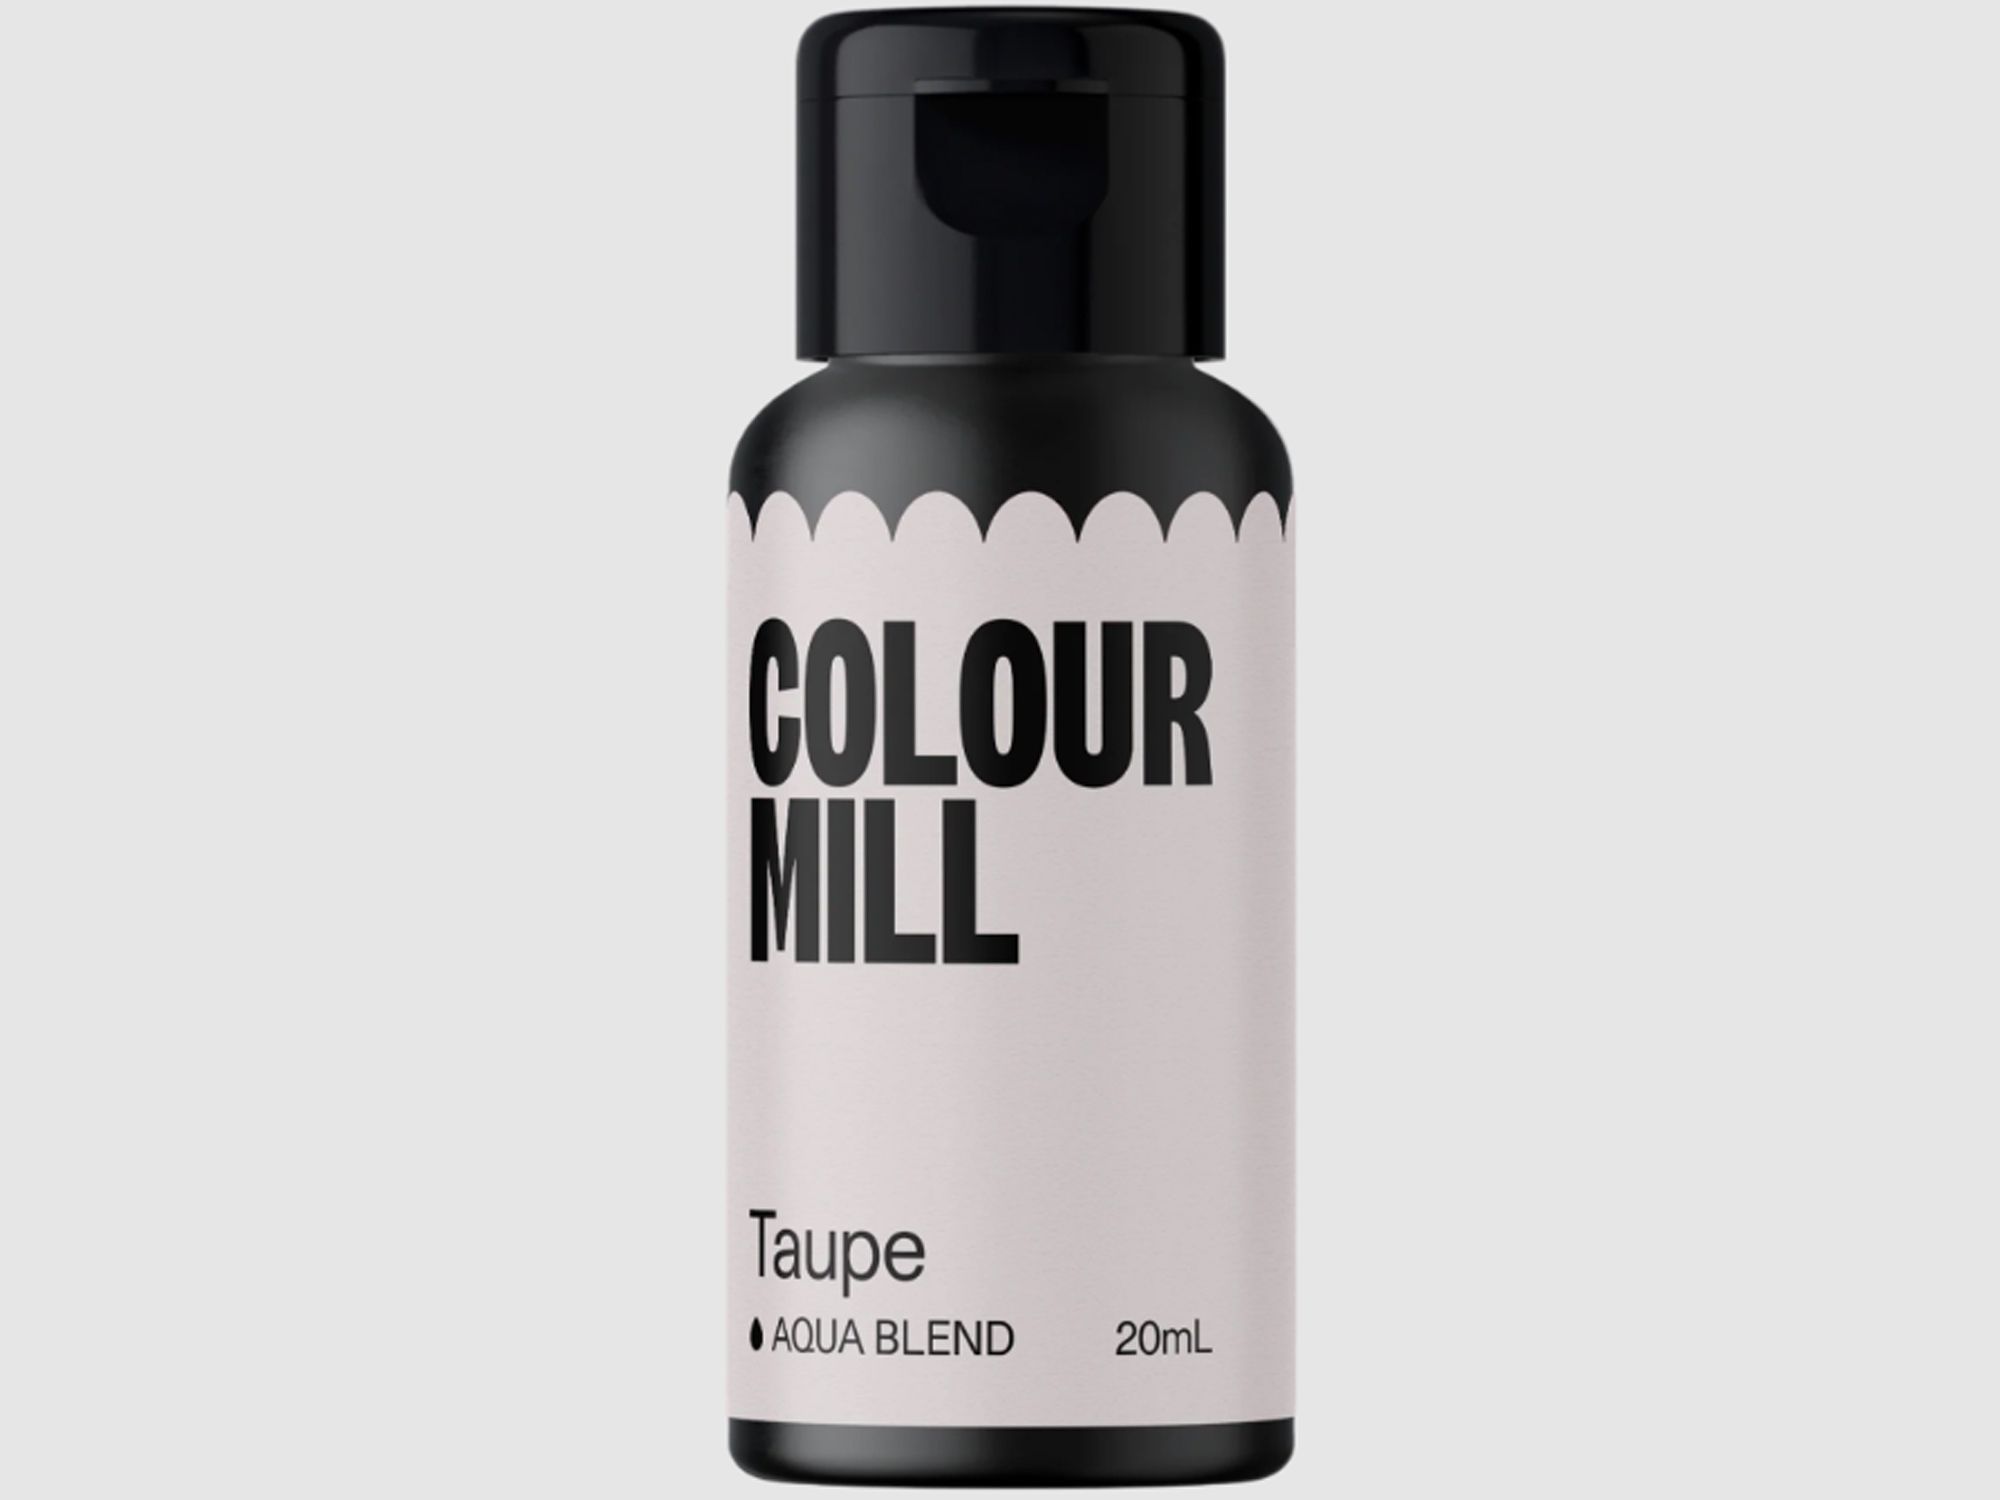 Colour Mill Taupe (Aqua Blend) 20ml